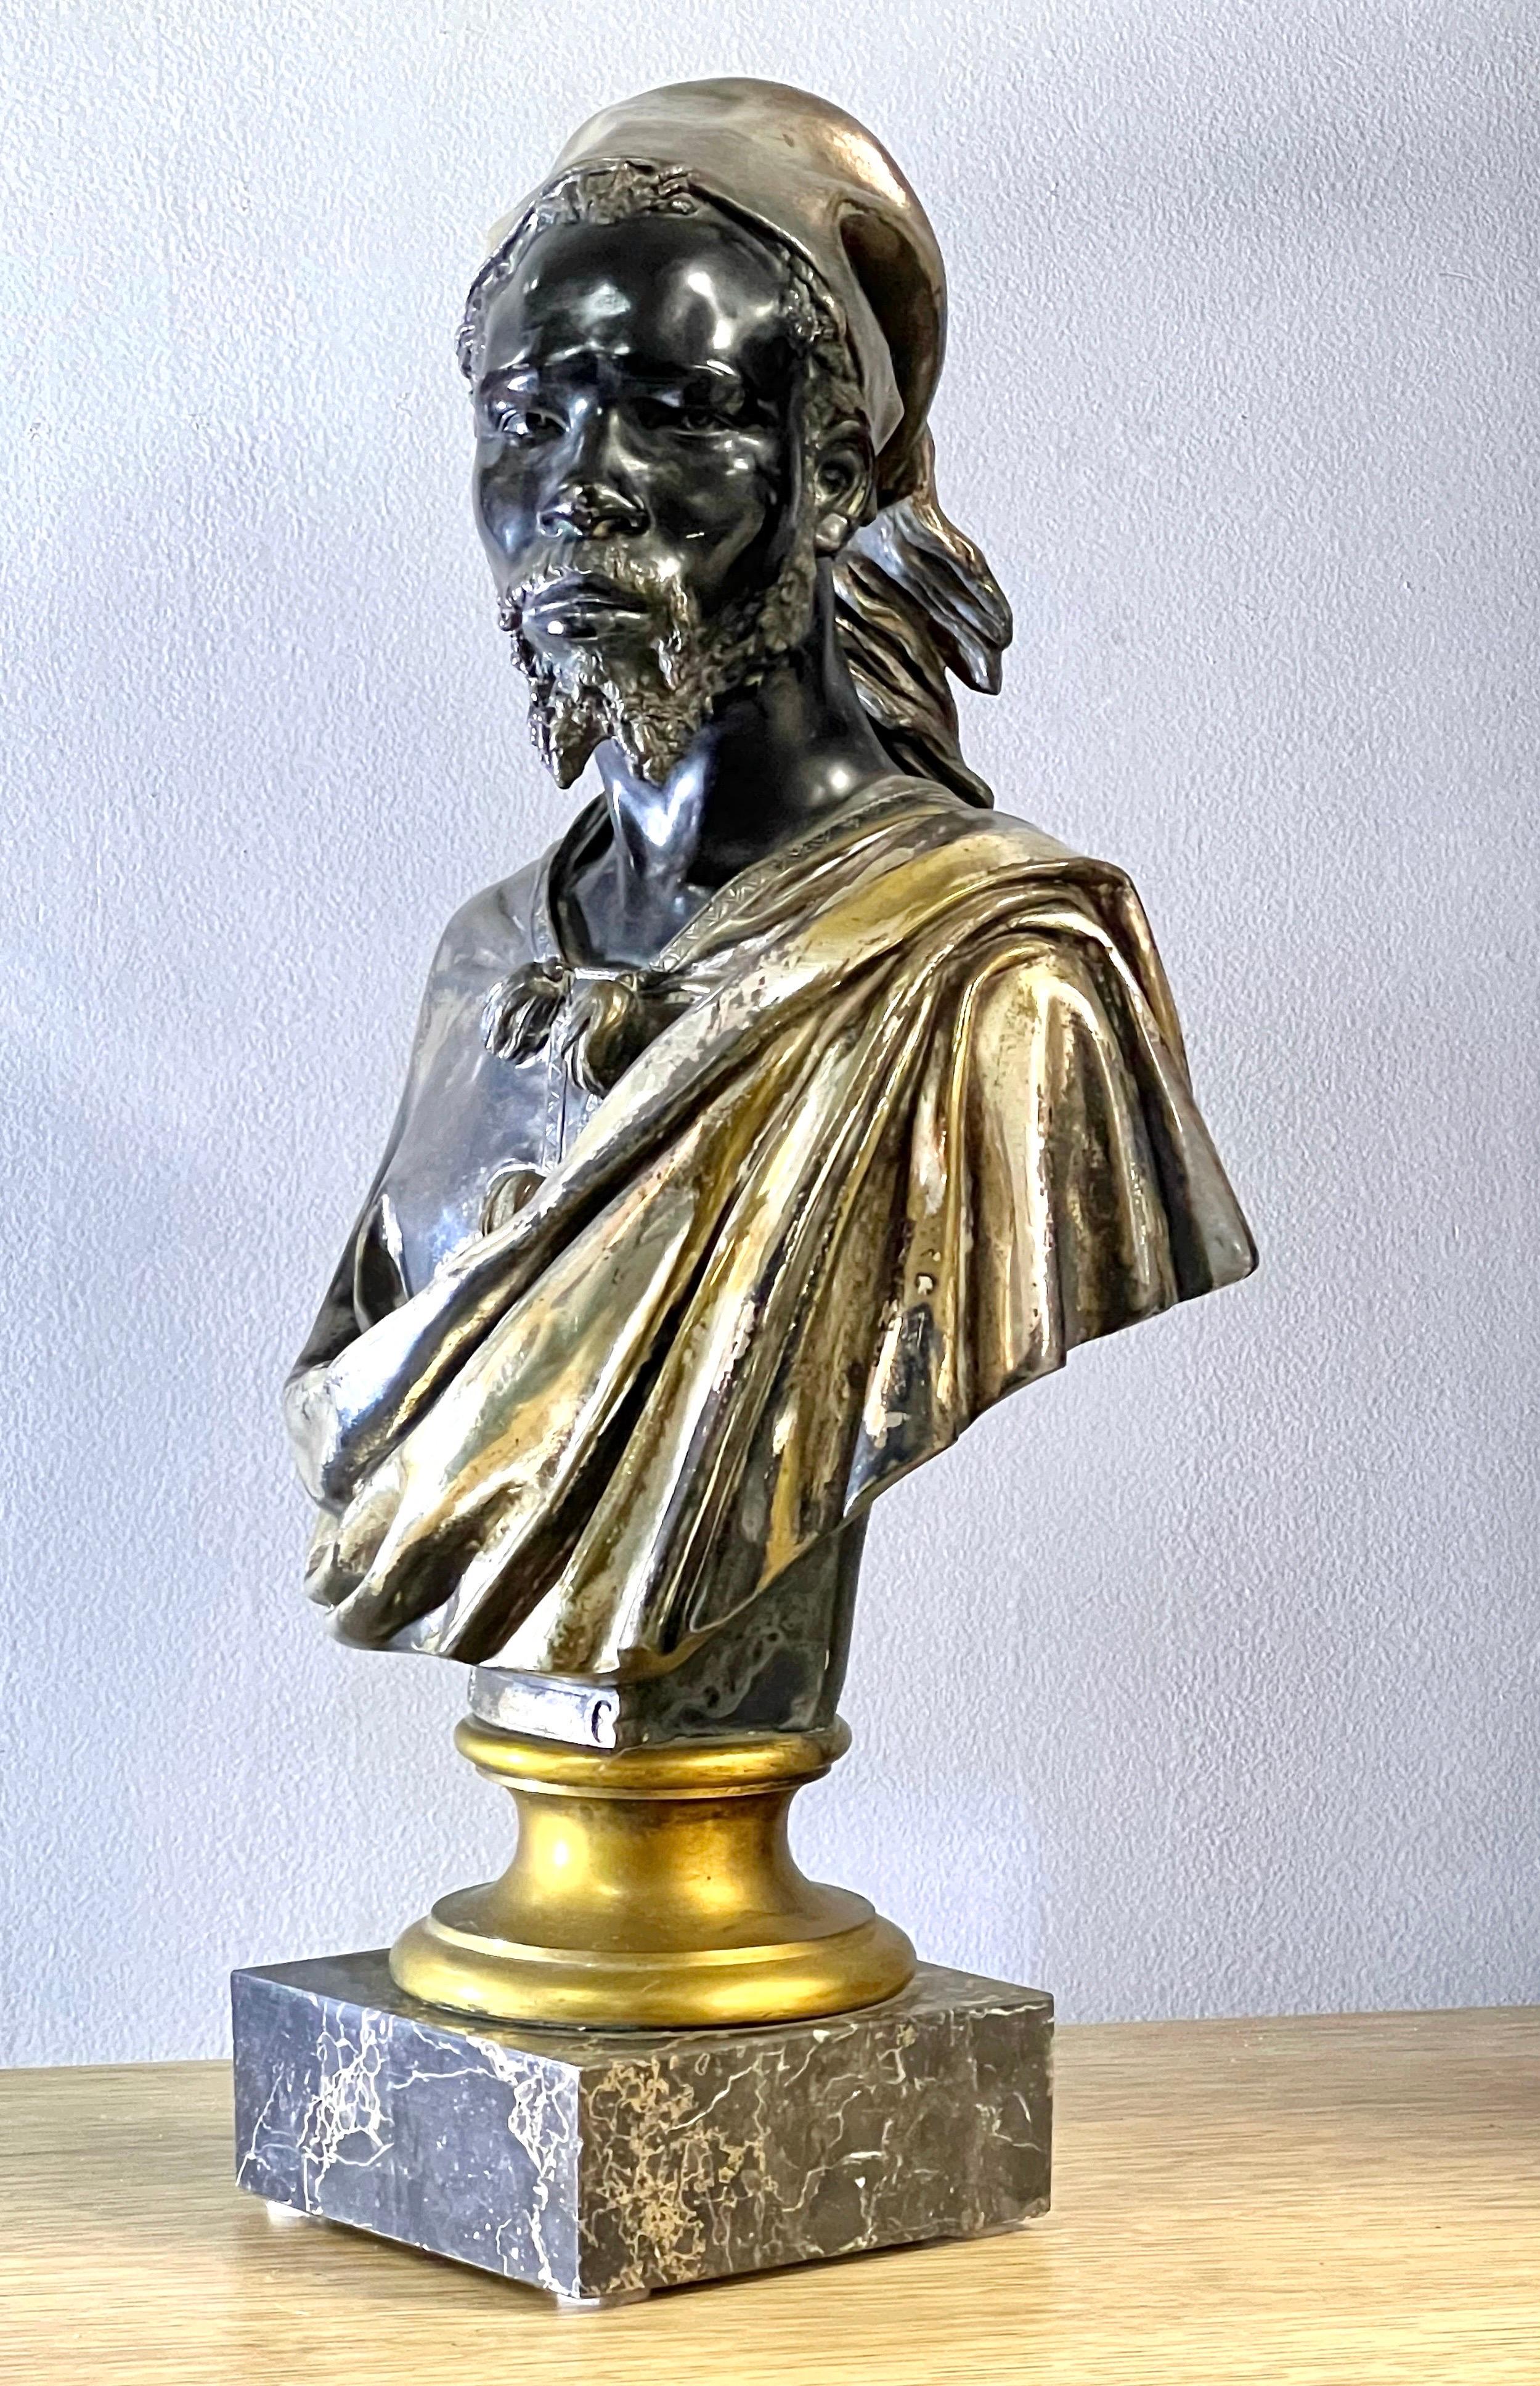 Sculpture en bronze de Charles Cordier. 
Signé Cordier sur le bord de la tunique. 
La base mesure environ 2